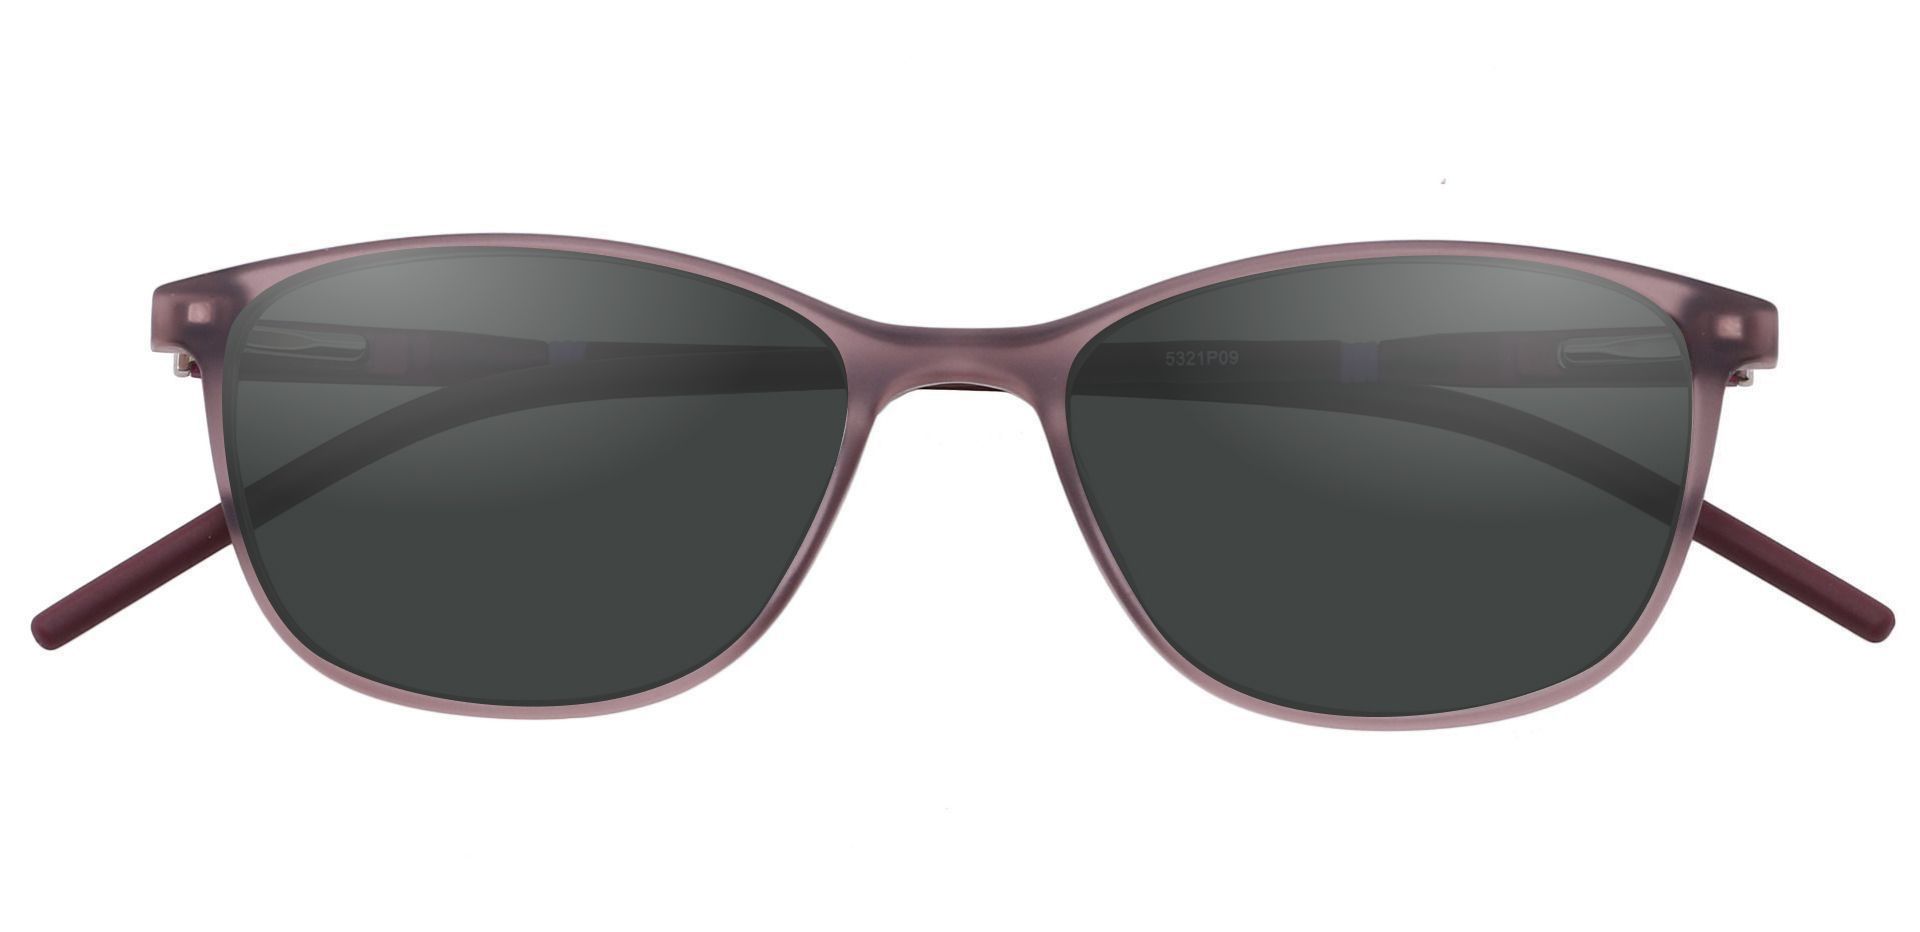 Hazel Square Progressive Sunglasses - Purple Frame With Gray Lenses